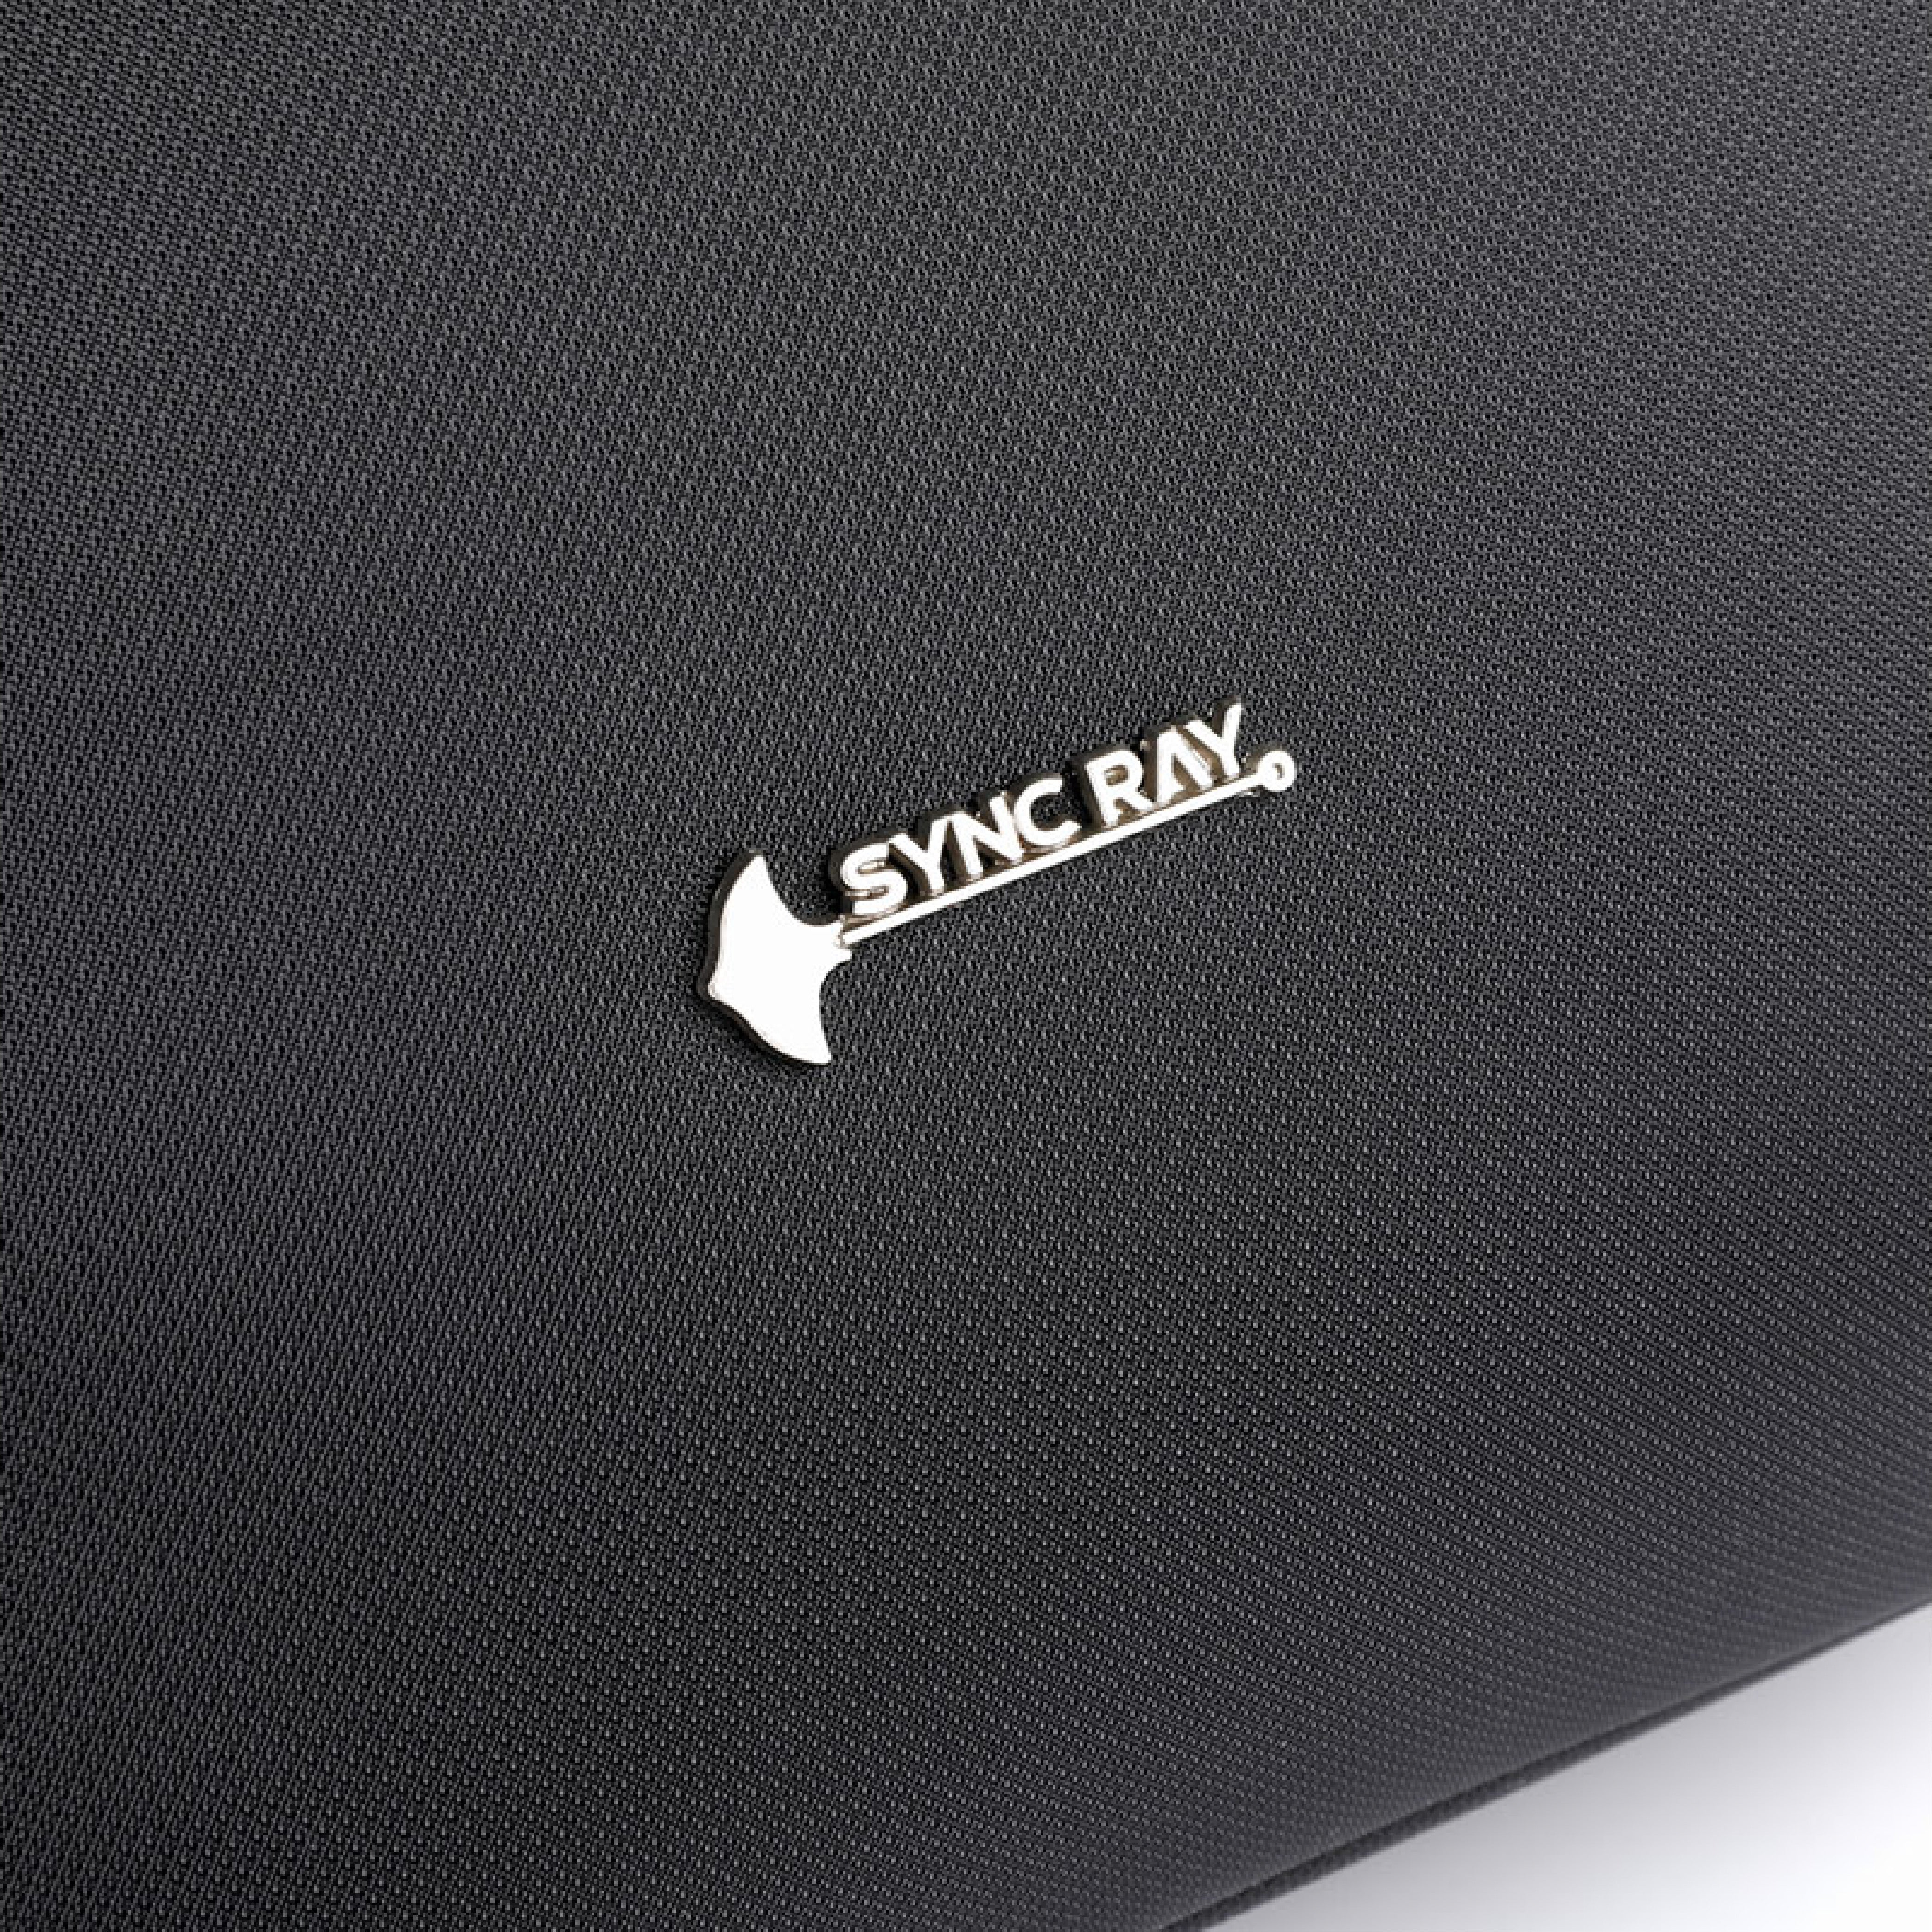 Sync Ray SR-BK02 Mochila para Laptop hasta  15,6 pulgadas con puerto de carga usb 3.0